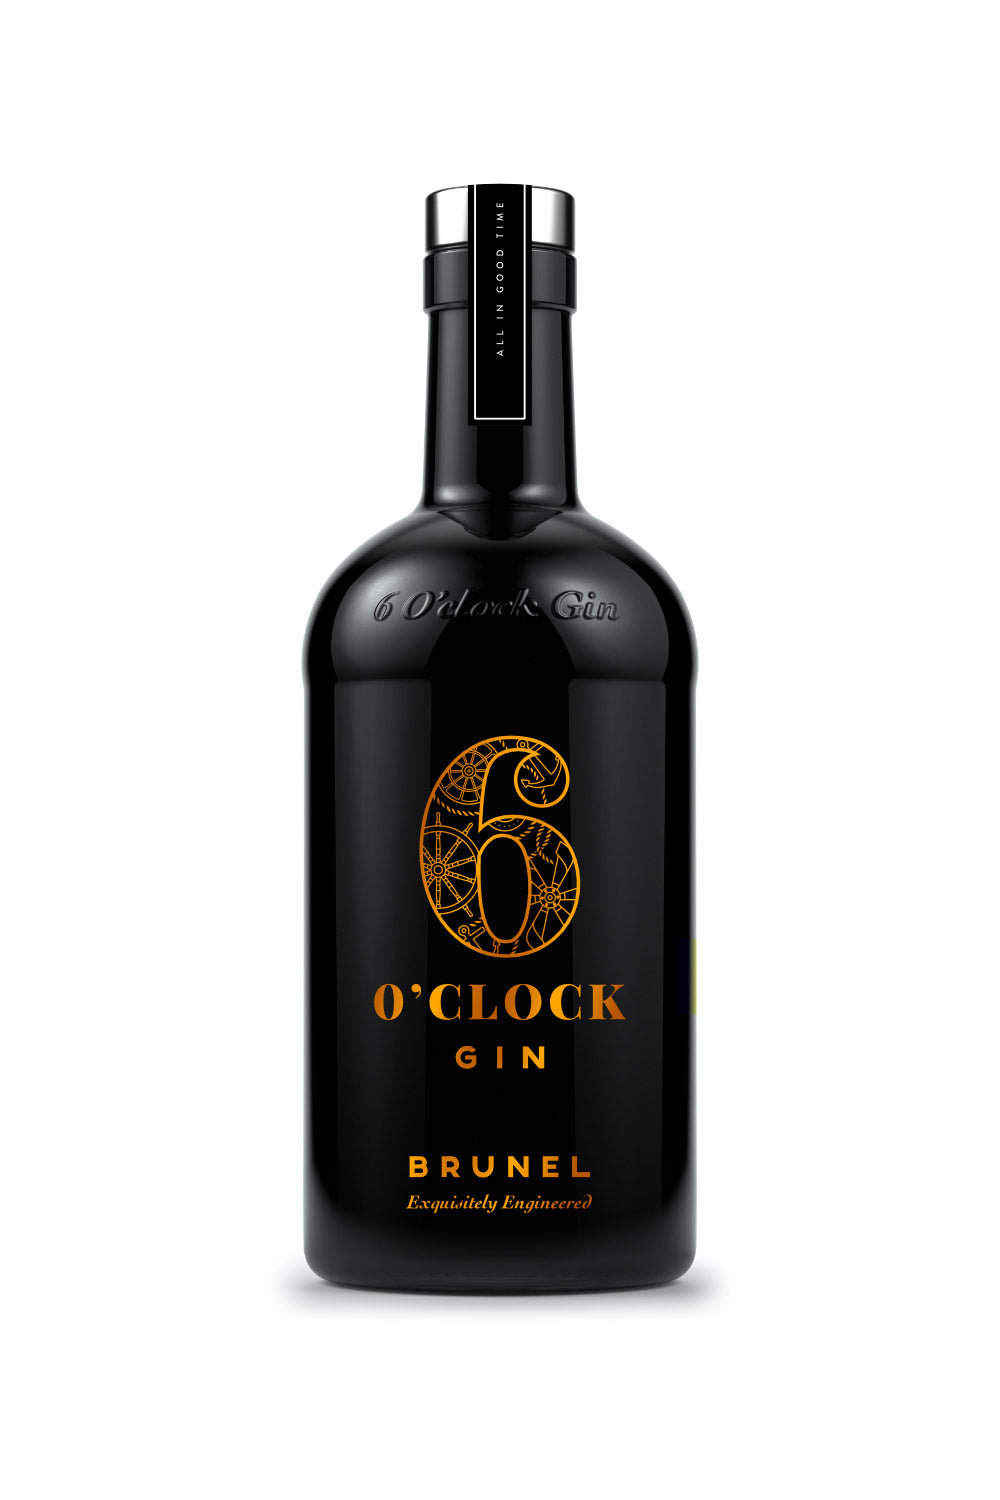 6 O'clock Gin Brunel